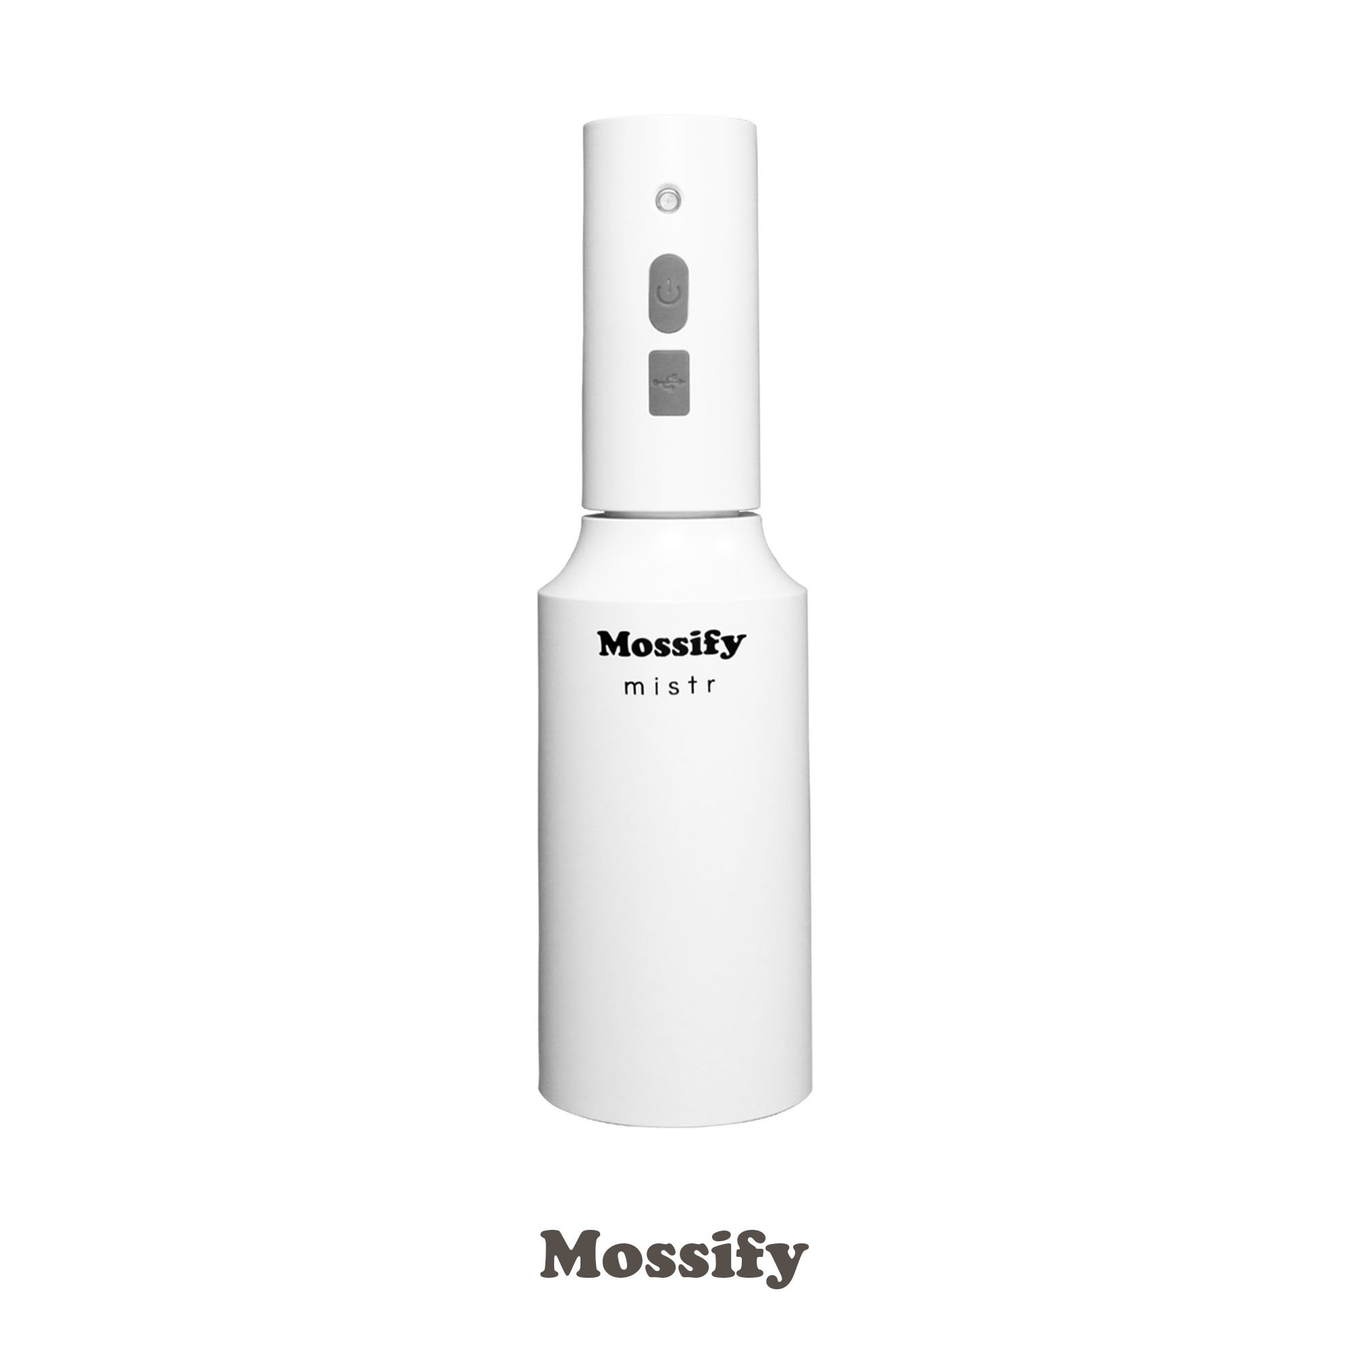 Mossify mistr™